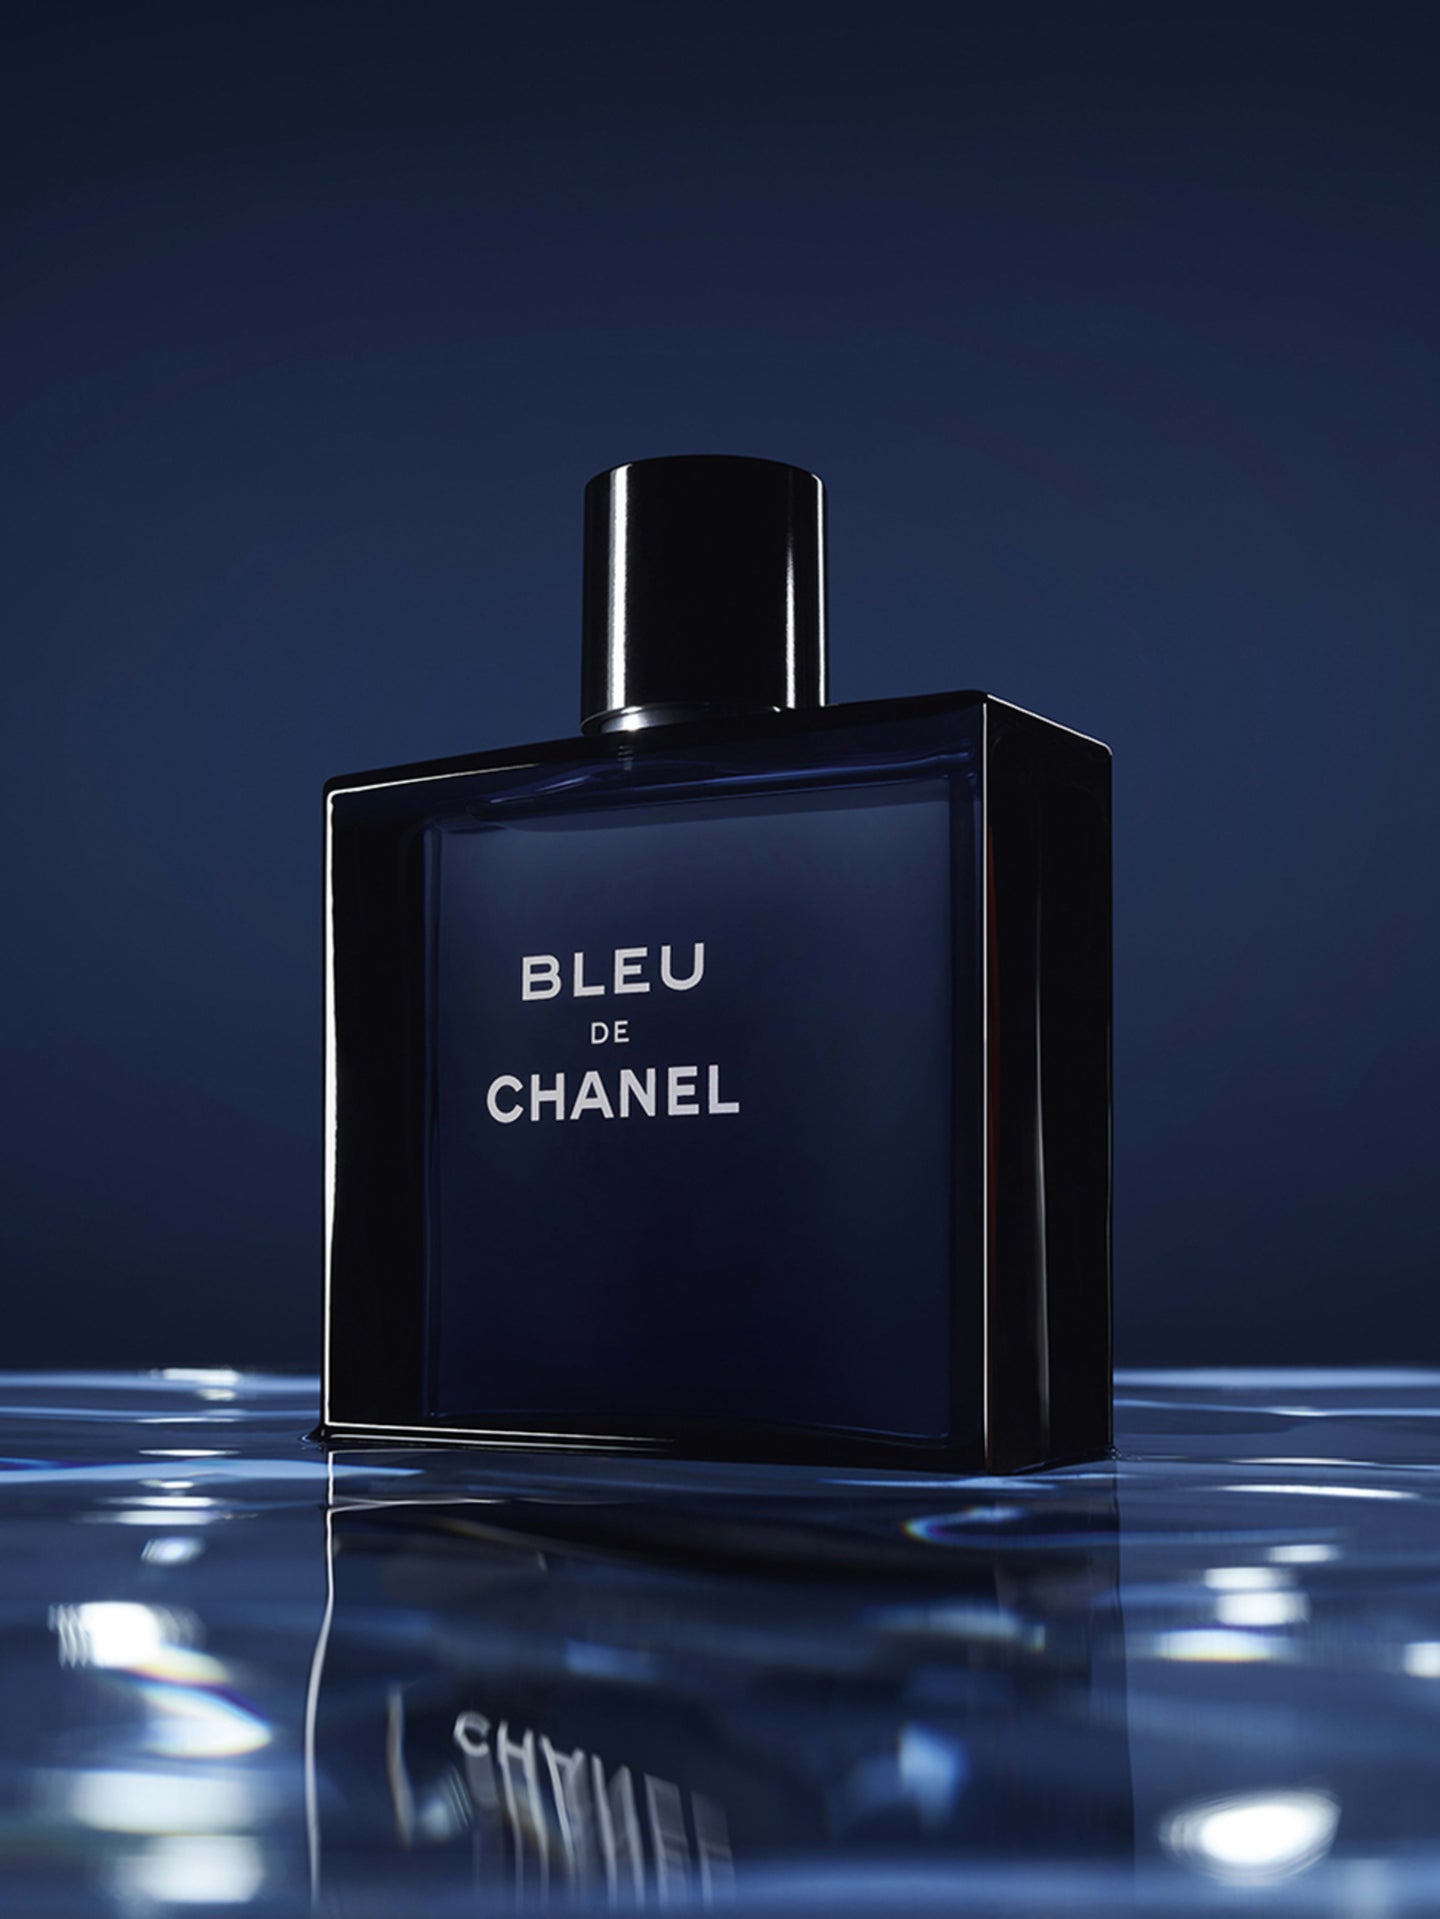 CHANEL bleu de chanel parfum for men – SPRING NUTRITION